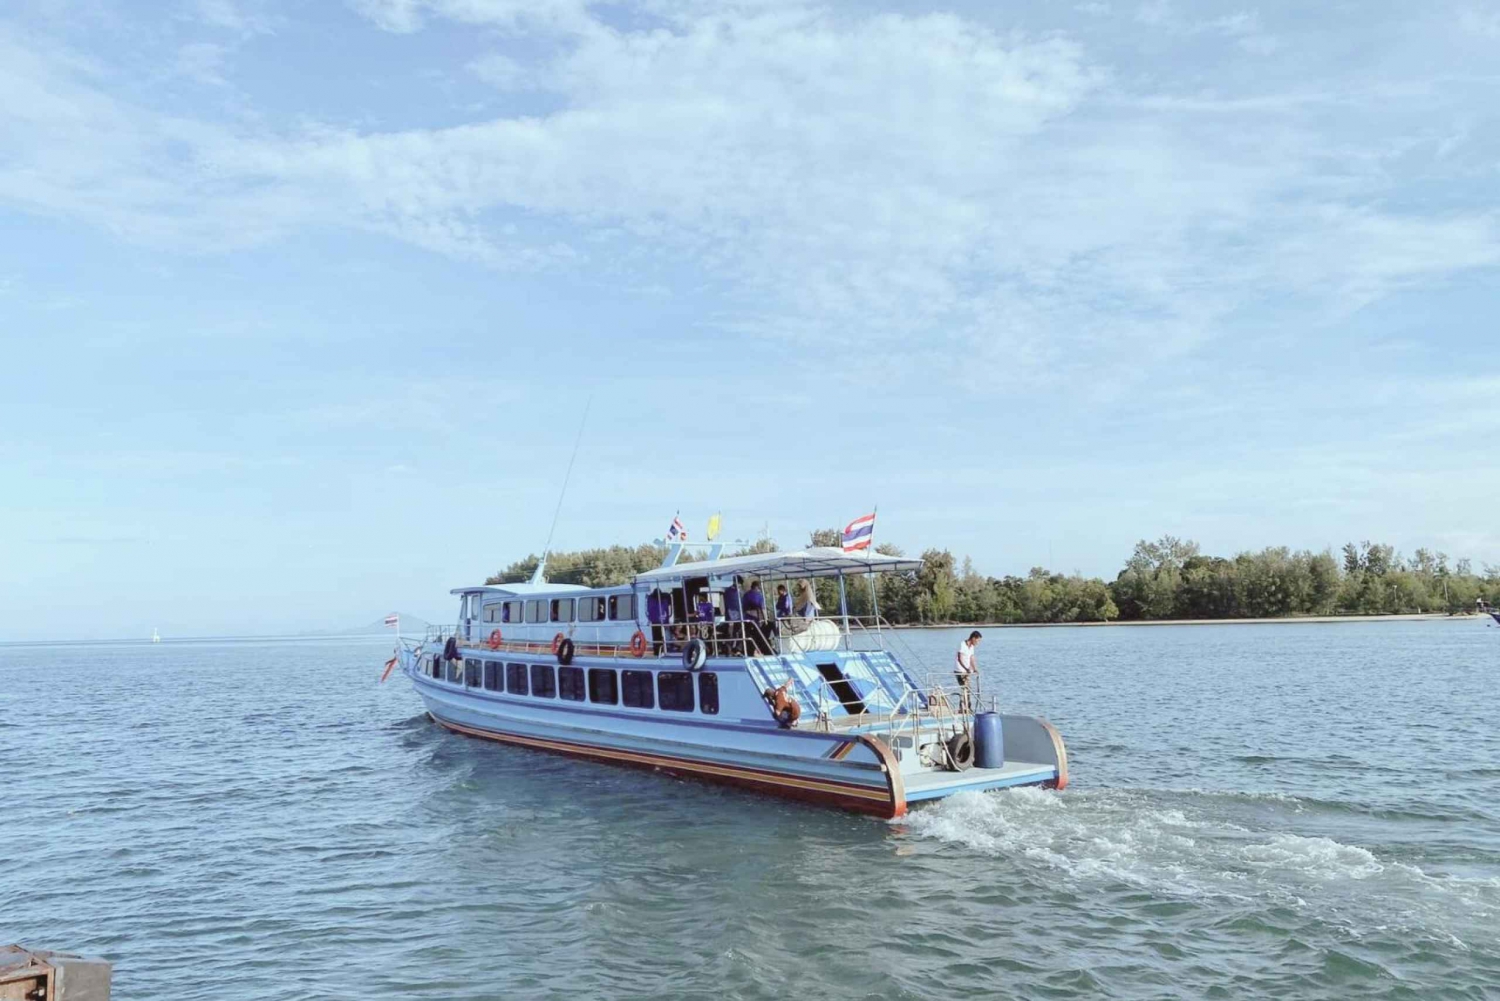 Ko Lanta : Ferry Boat From Ko Lanta to Phuket Via Ko PhiPhi